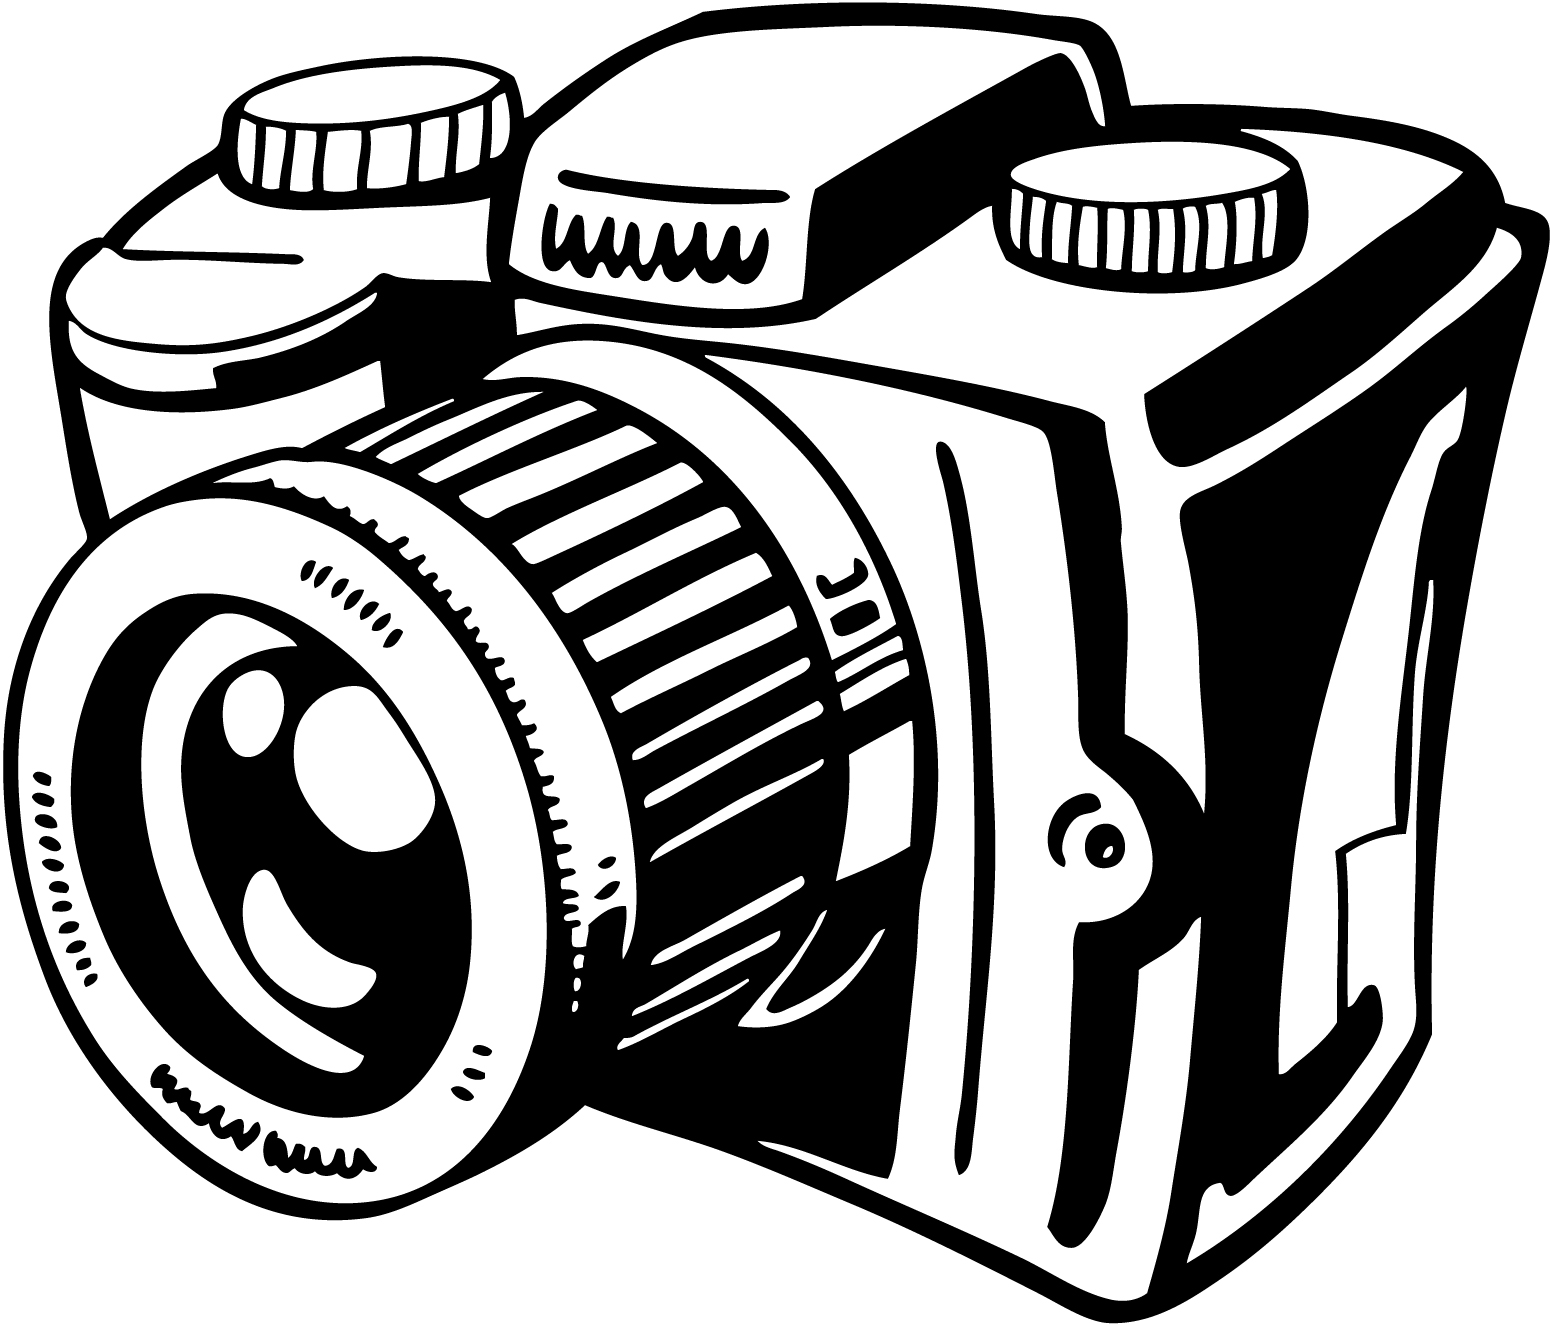 Free Logo Kamera, Download Free Clip Art, Free Clip Art on ...
